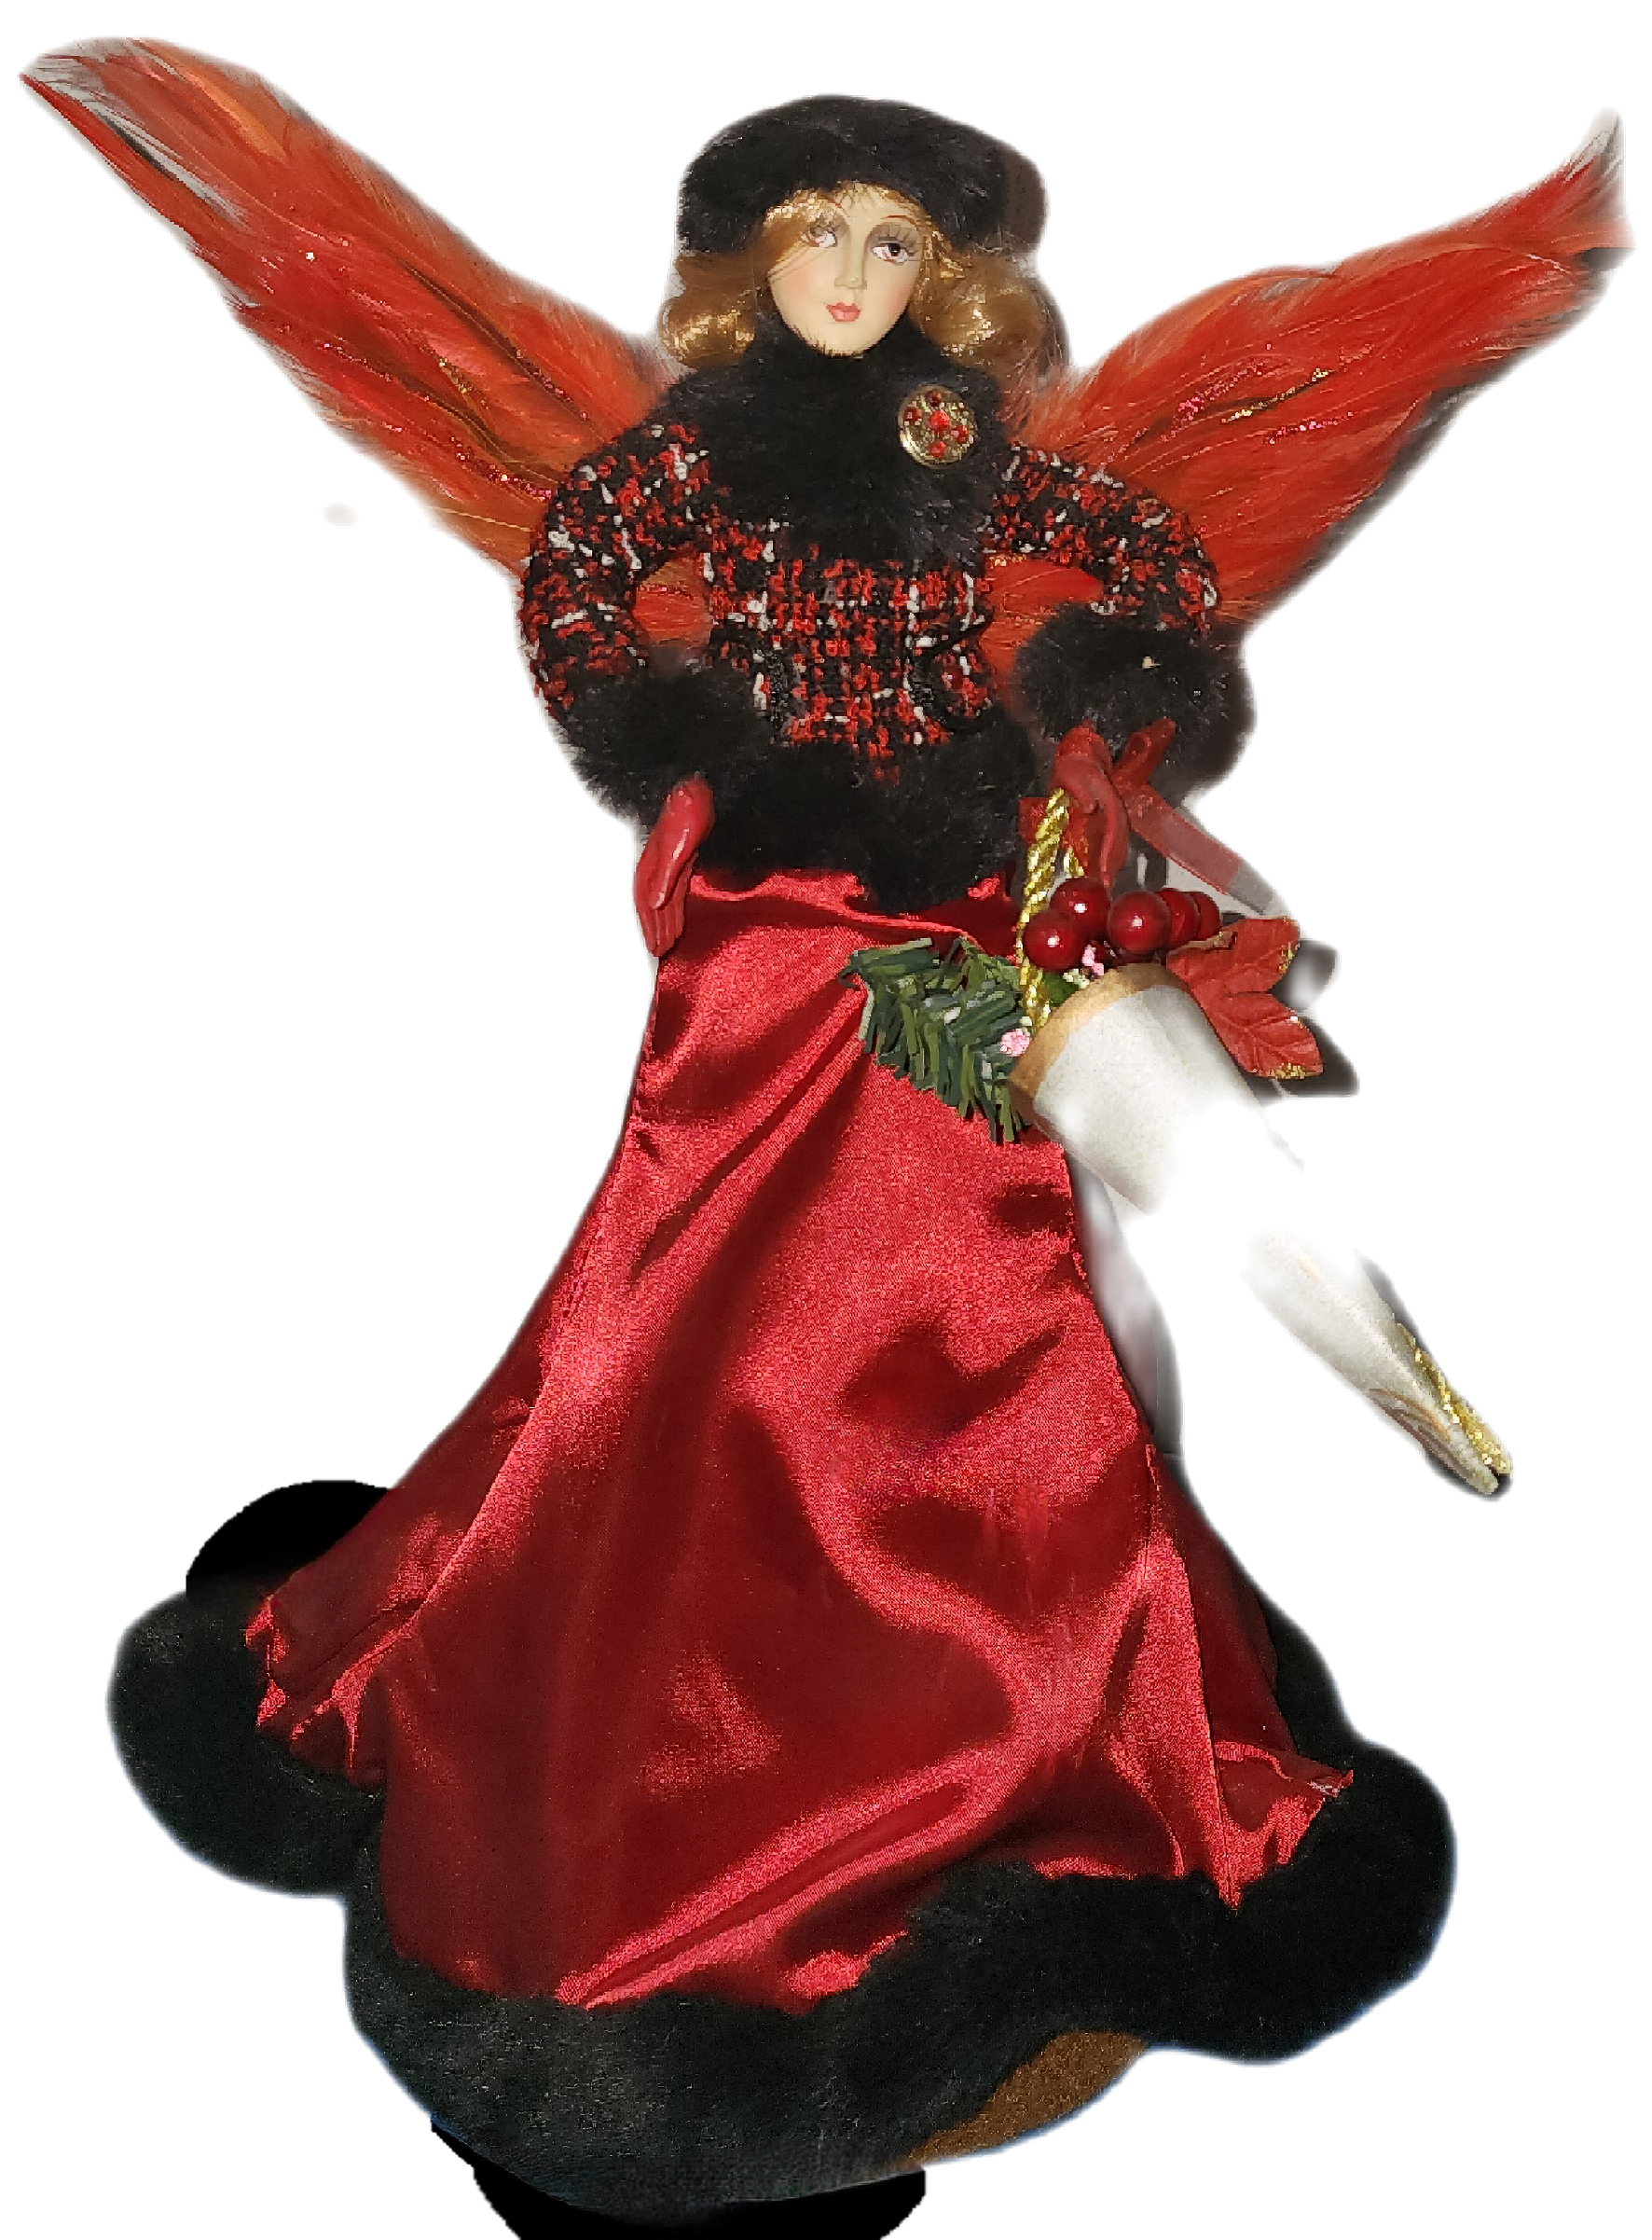 Sondra - Gray Witch Spirit Doll - Talent Enhancement, Money Manifestation, Scaring Your Enemies